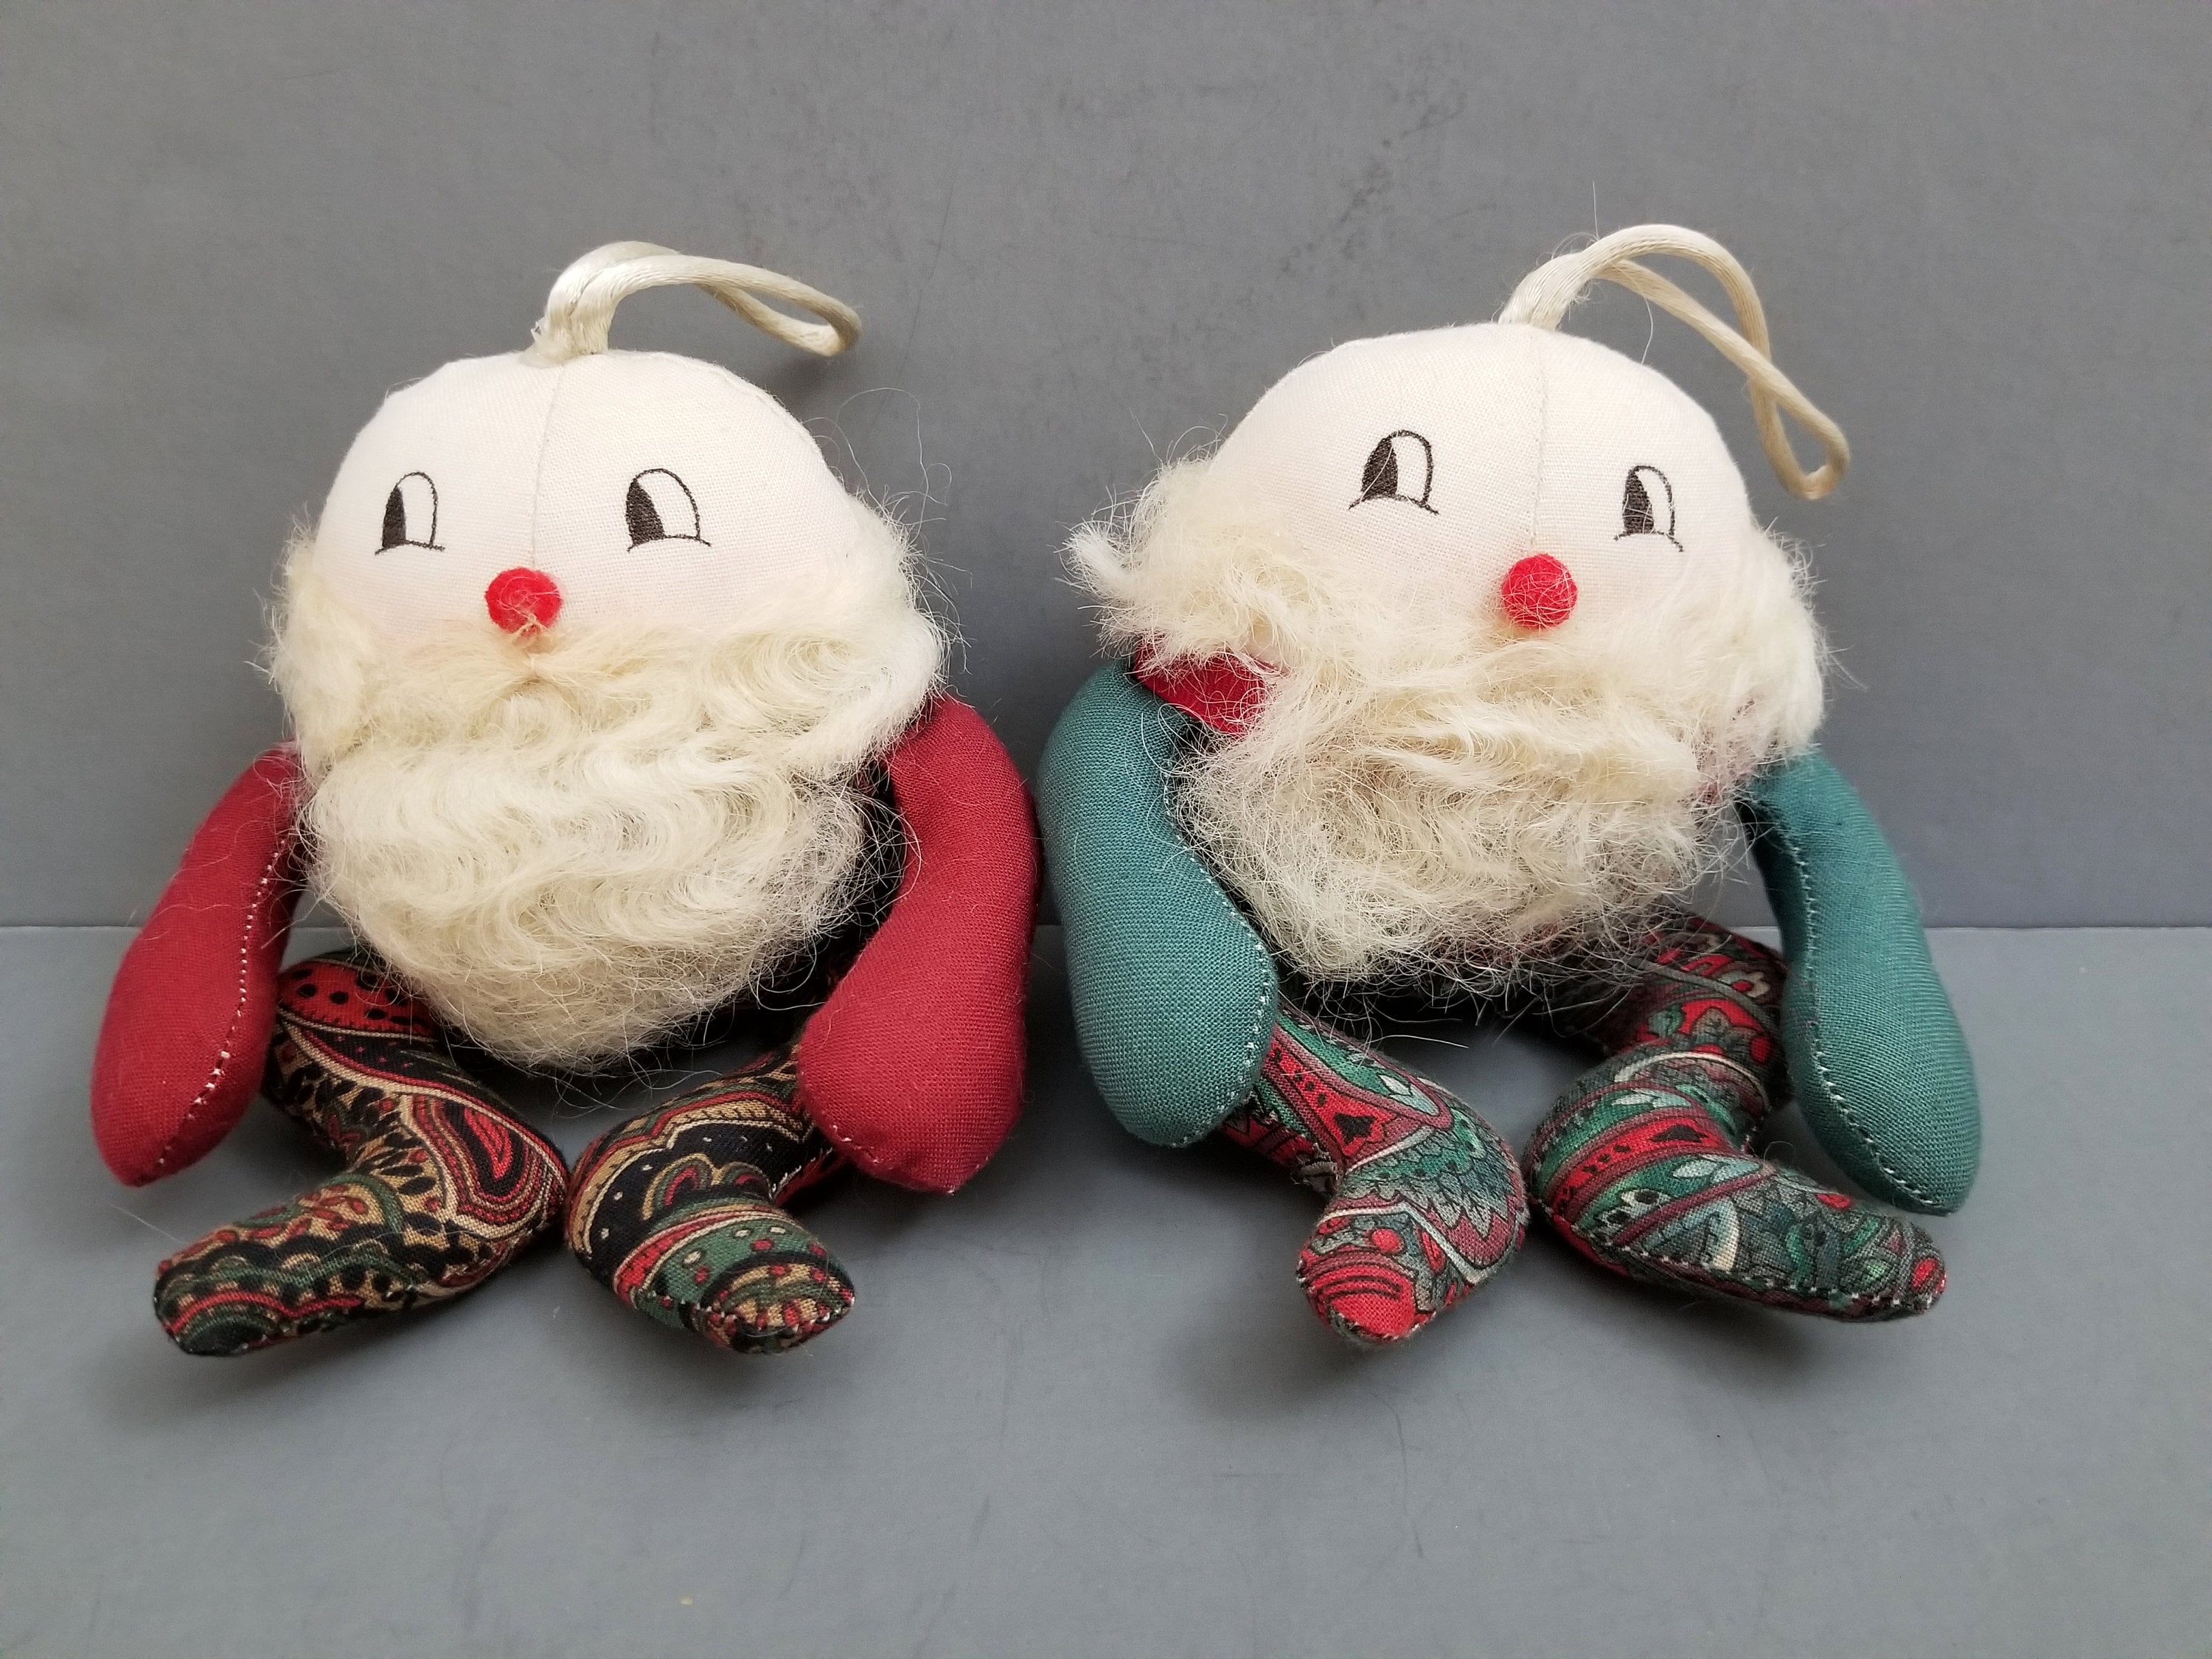 Vintage Kitsch Holiday Humpty Dumpty Bearded Santa Claus Xmas Decor Set of 2 Antique Handmade Christmas Ornaments